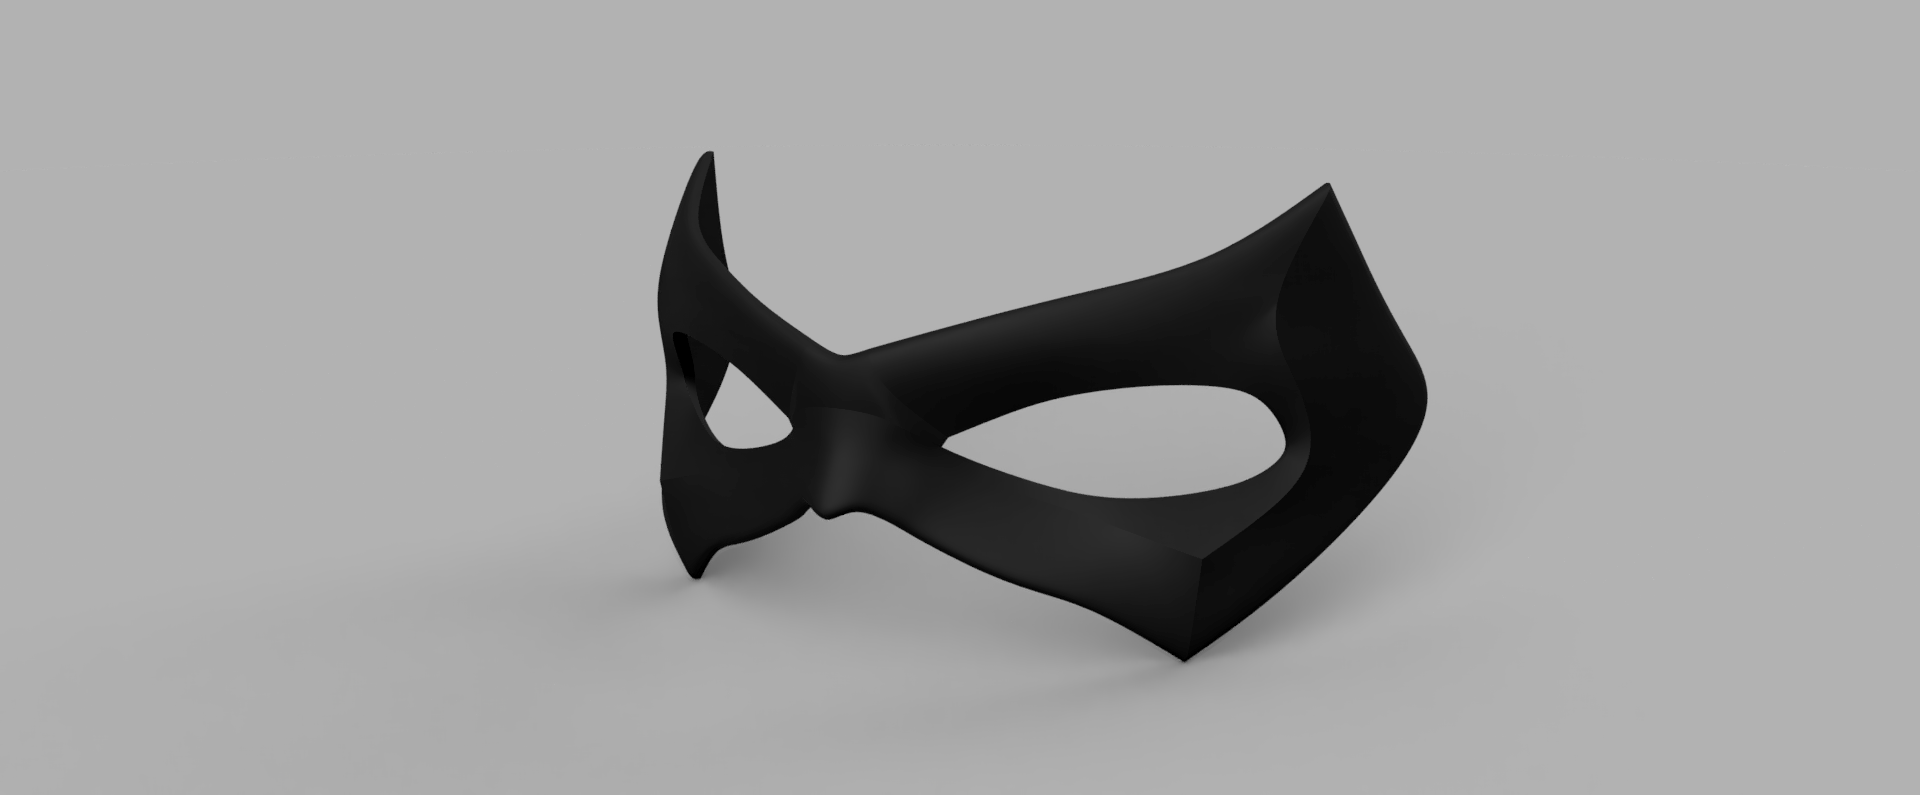 Arkham Knight Robin Mask.png Télécharger fichier STL Arkham Knight Robin Mask • Objet à imprimer en 3D, VillainousPropShop